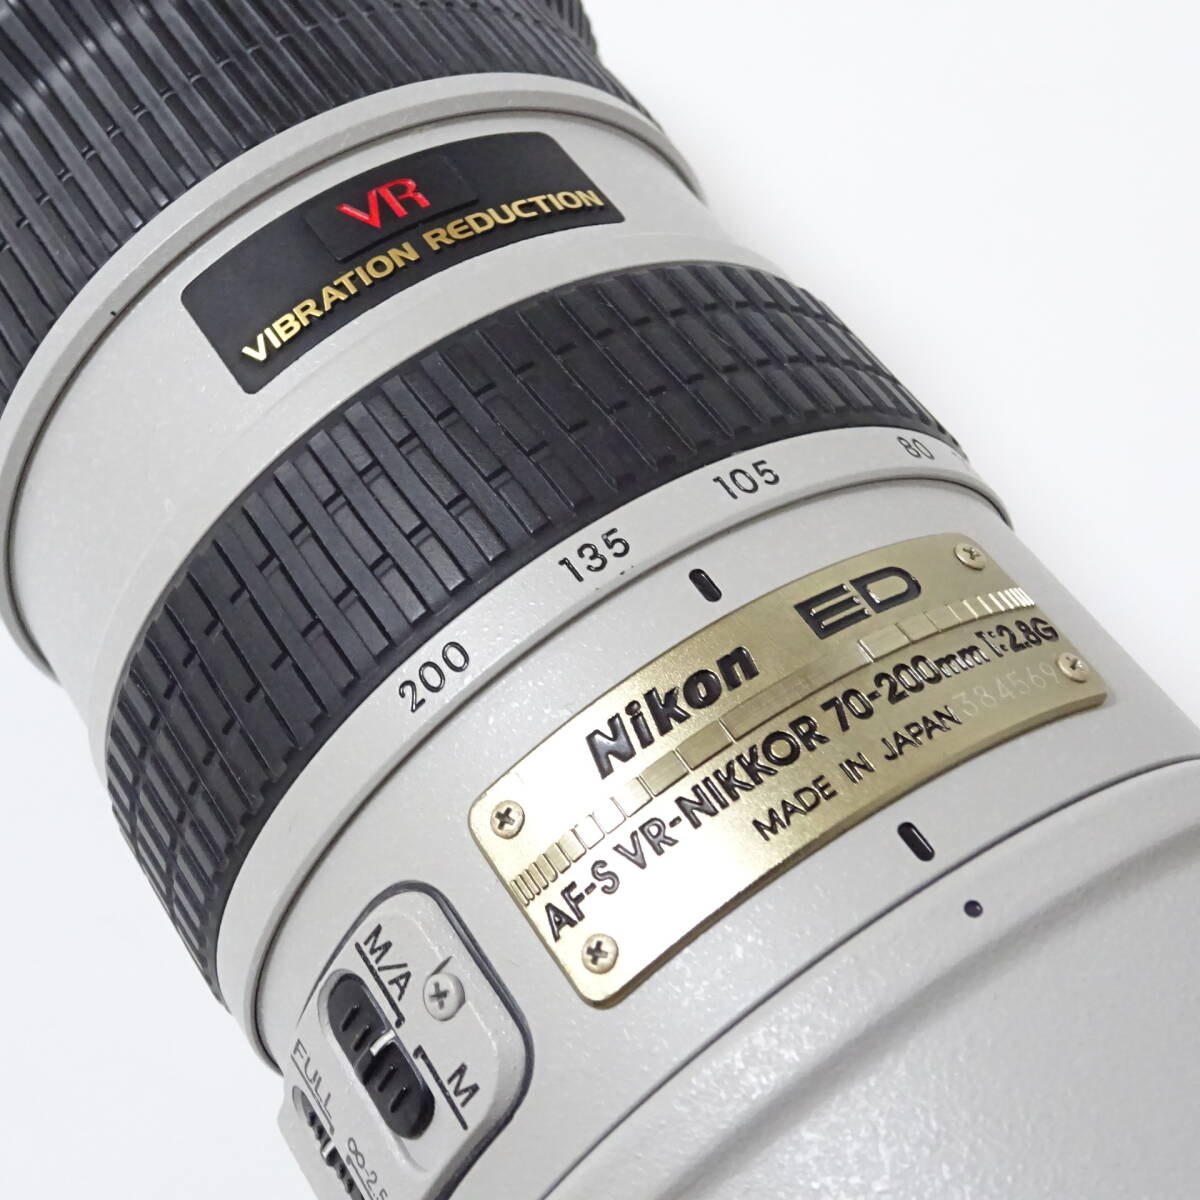  Nikon AF-S NIKKOR 70-200mm 1:2.8 G camera lens Nikon soft case attaching operation not yet verification junk 80 size shipping KK-2654763-84-mrrz